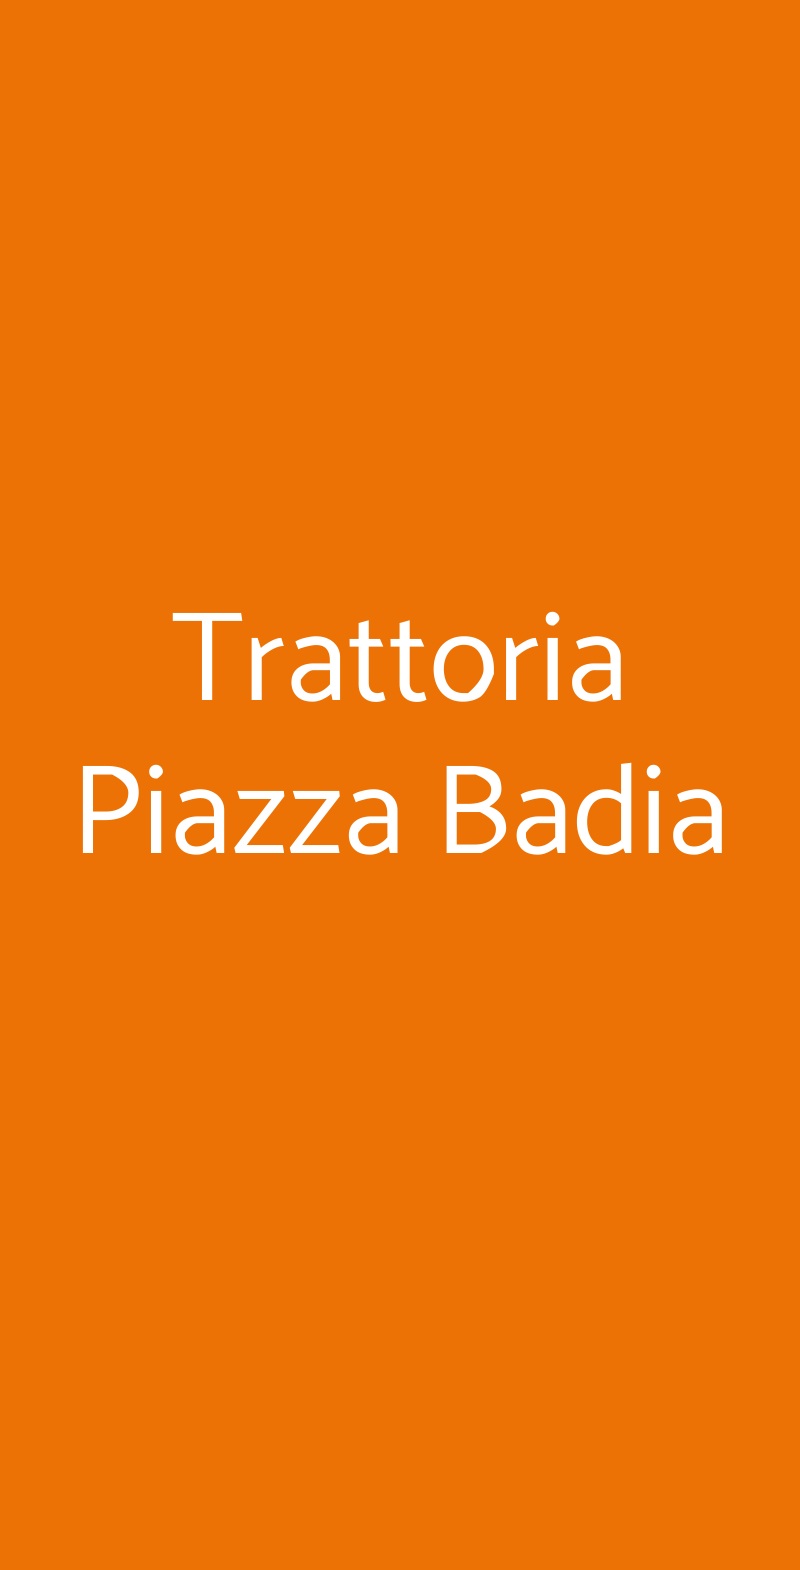 Trattoria Piazza Badia Taormina menù 1 pagina